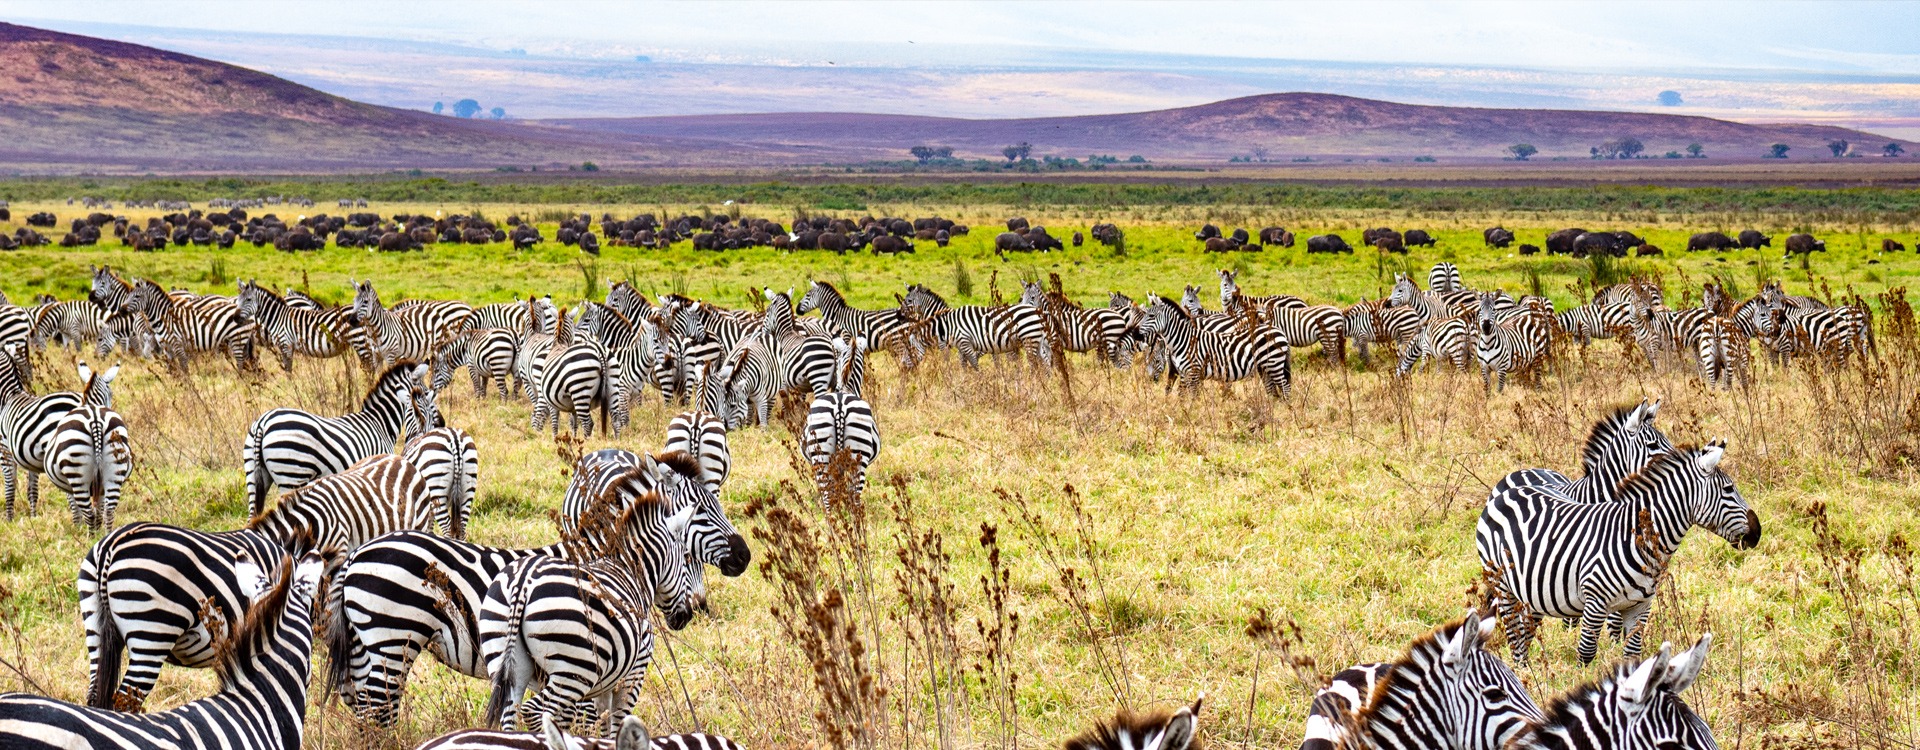 tanzania-national-park